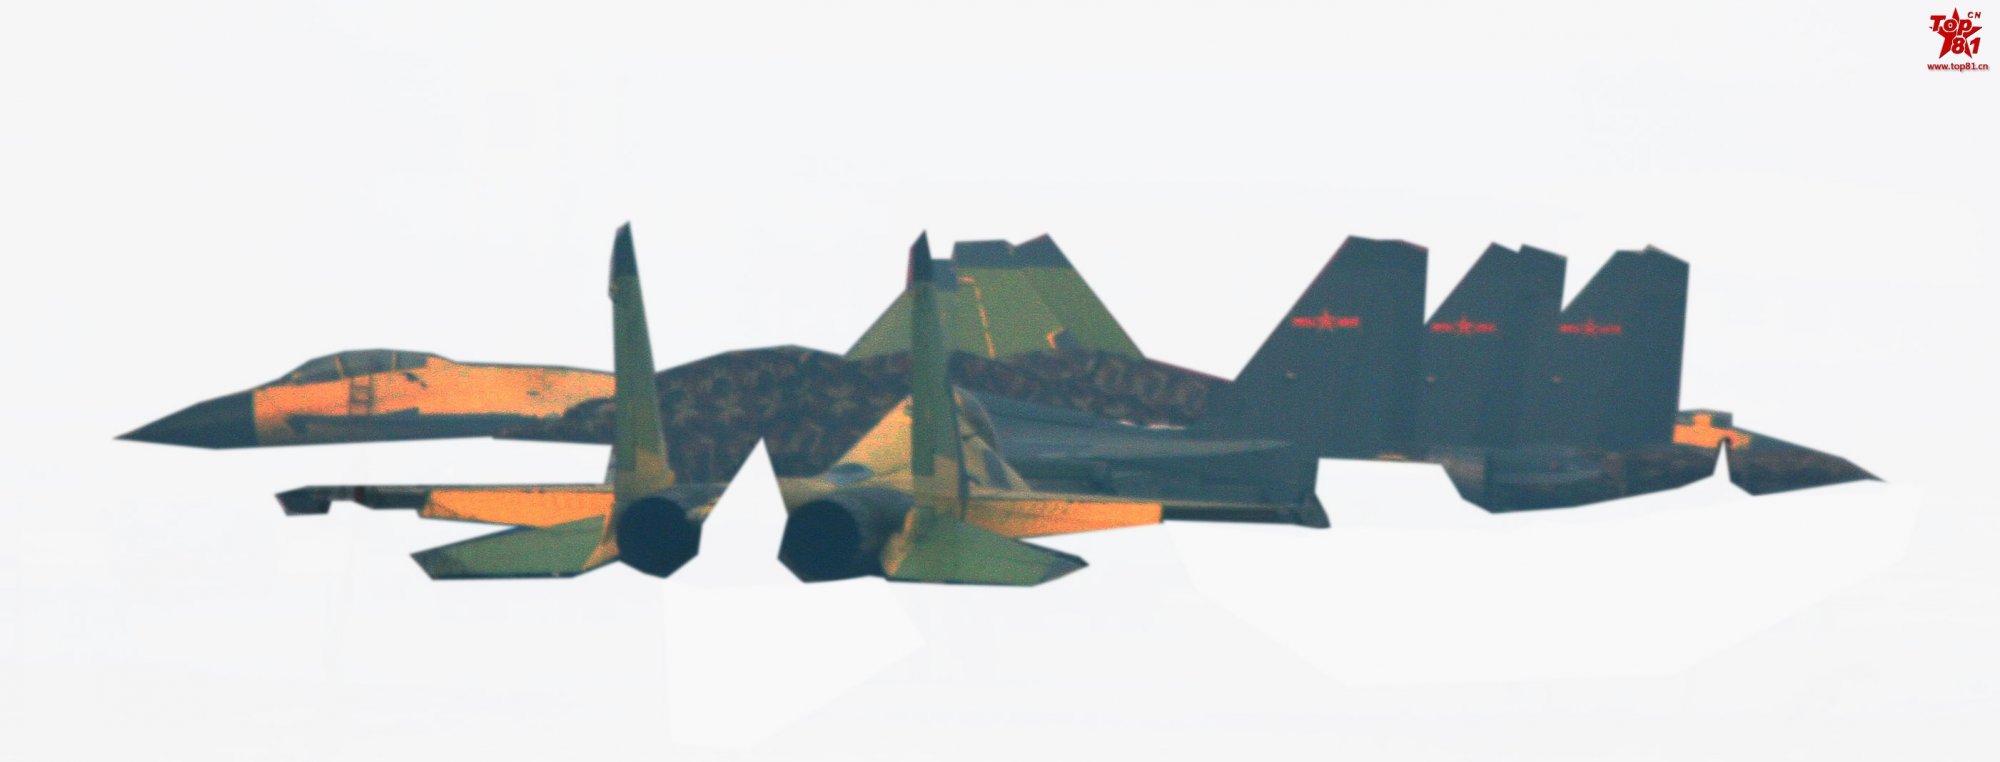 FC-31V2 maiden flight - Flankers in background 1.jpg